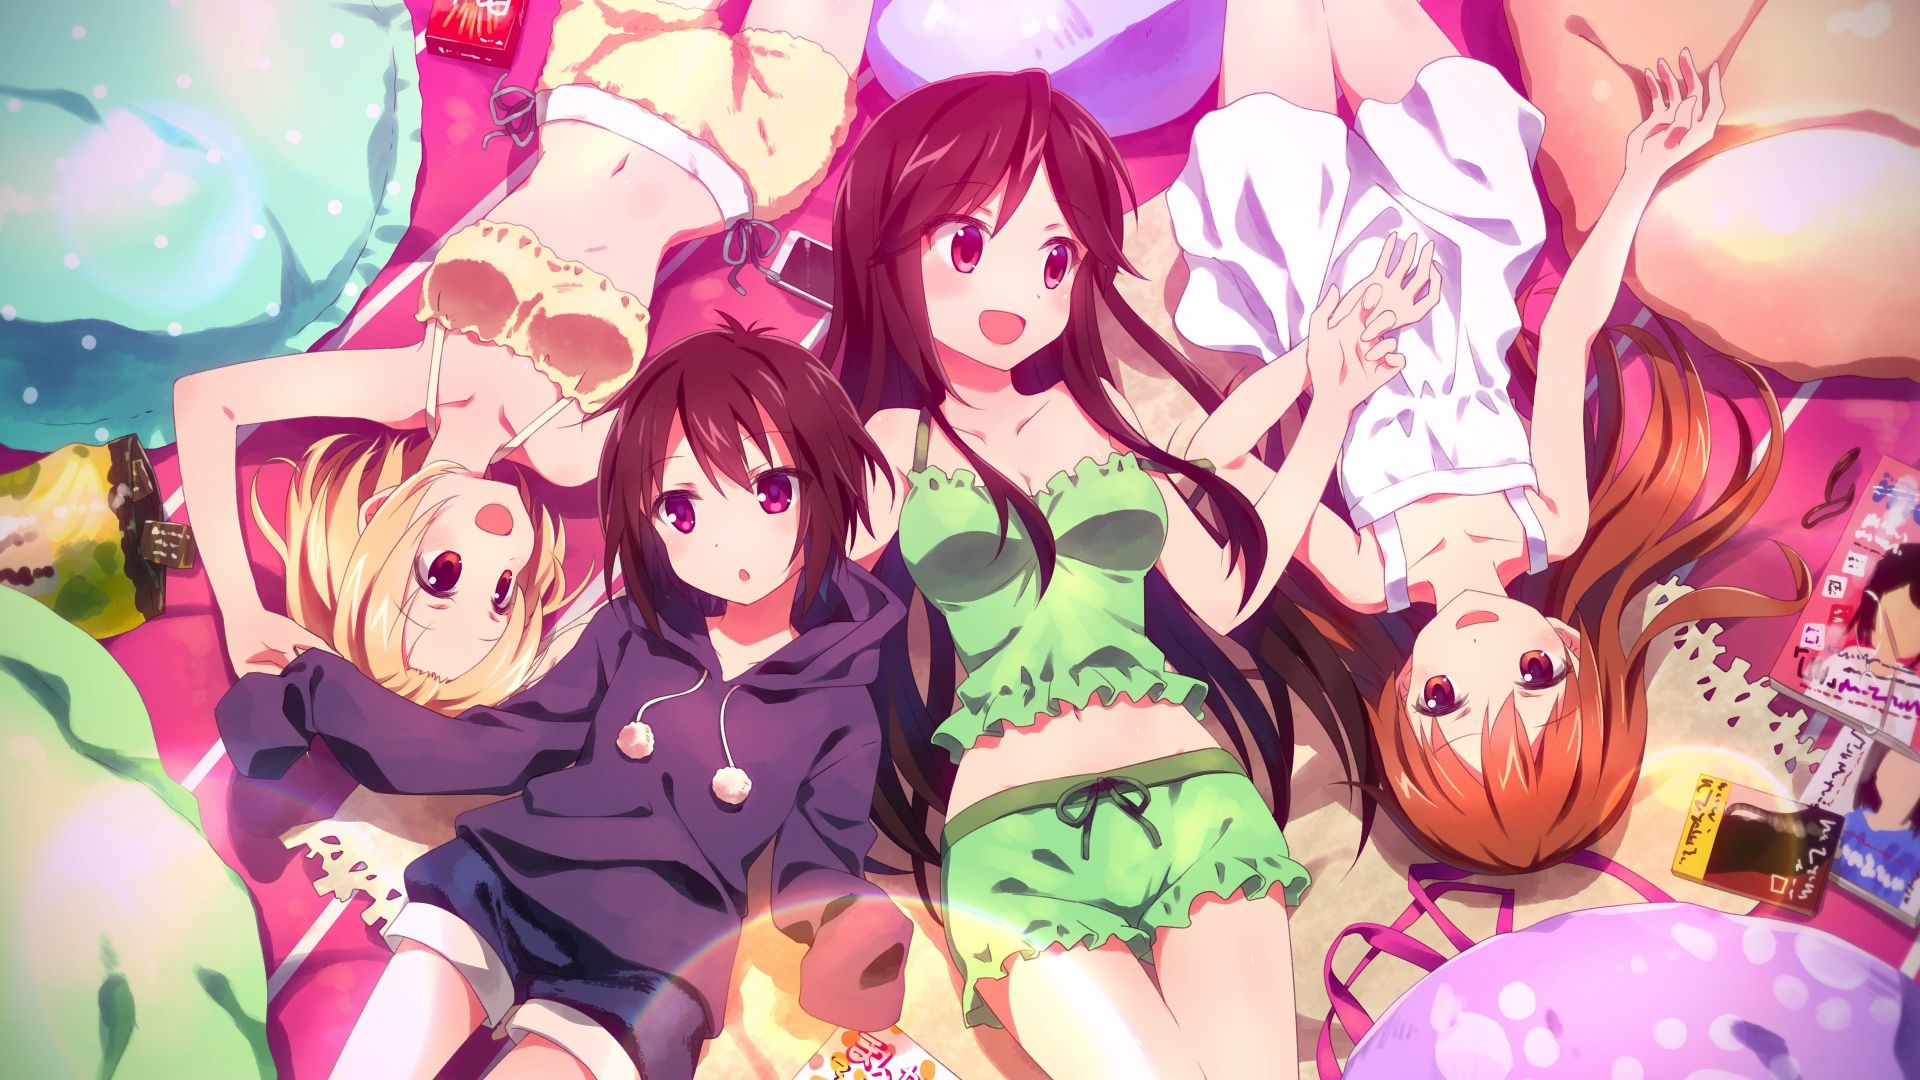 Wallpaper A Channel, anime girls, lying down, 4k